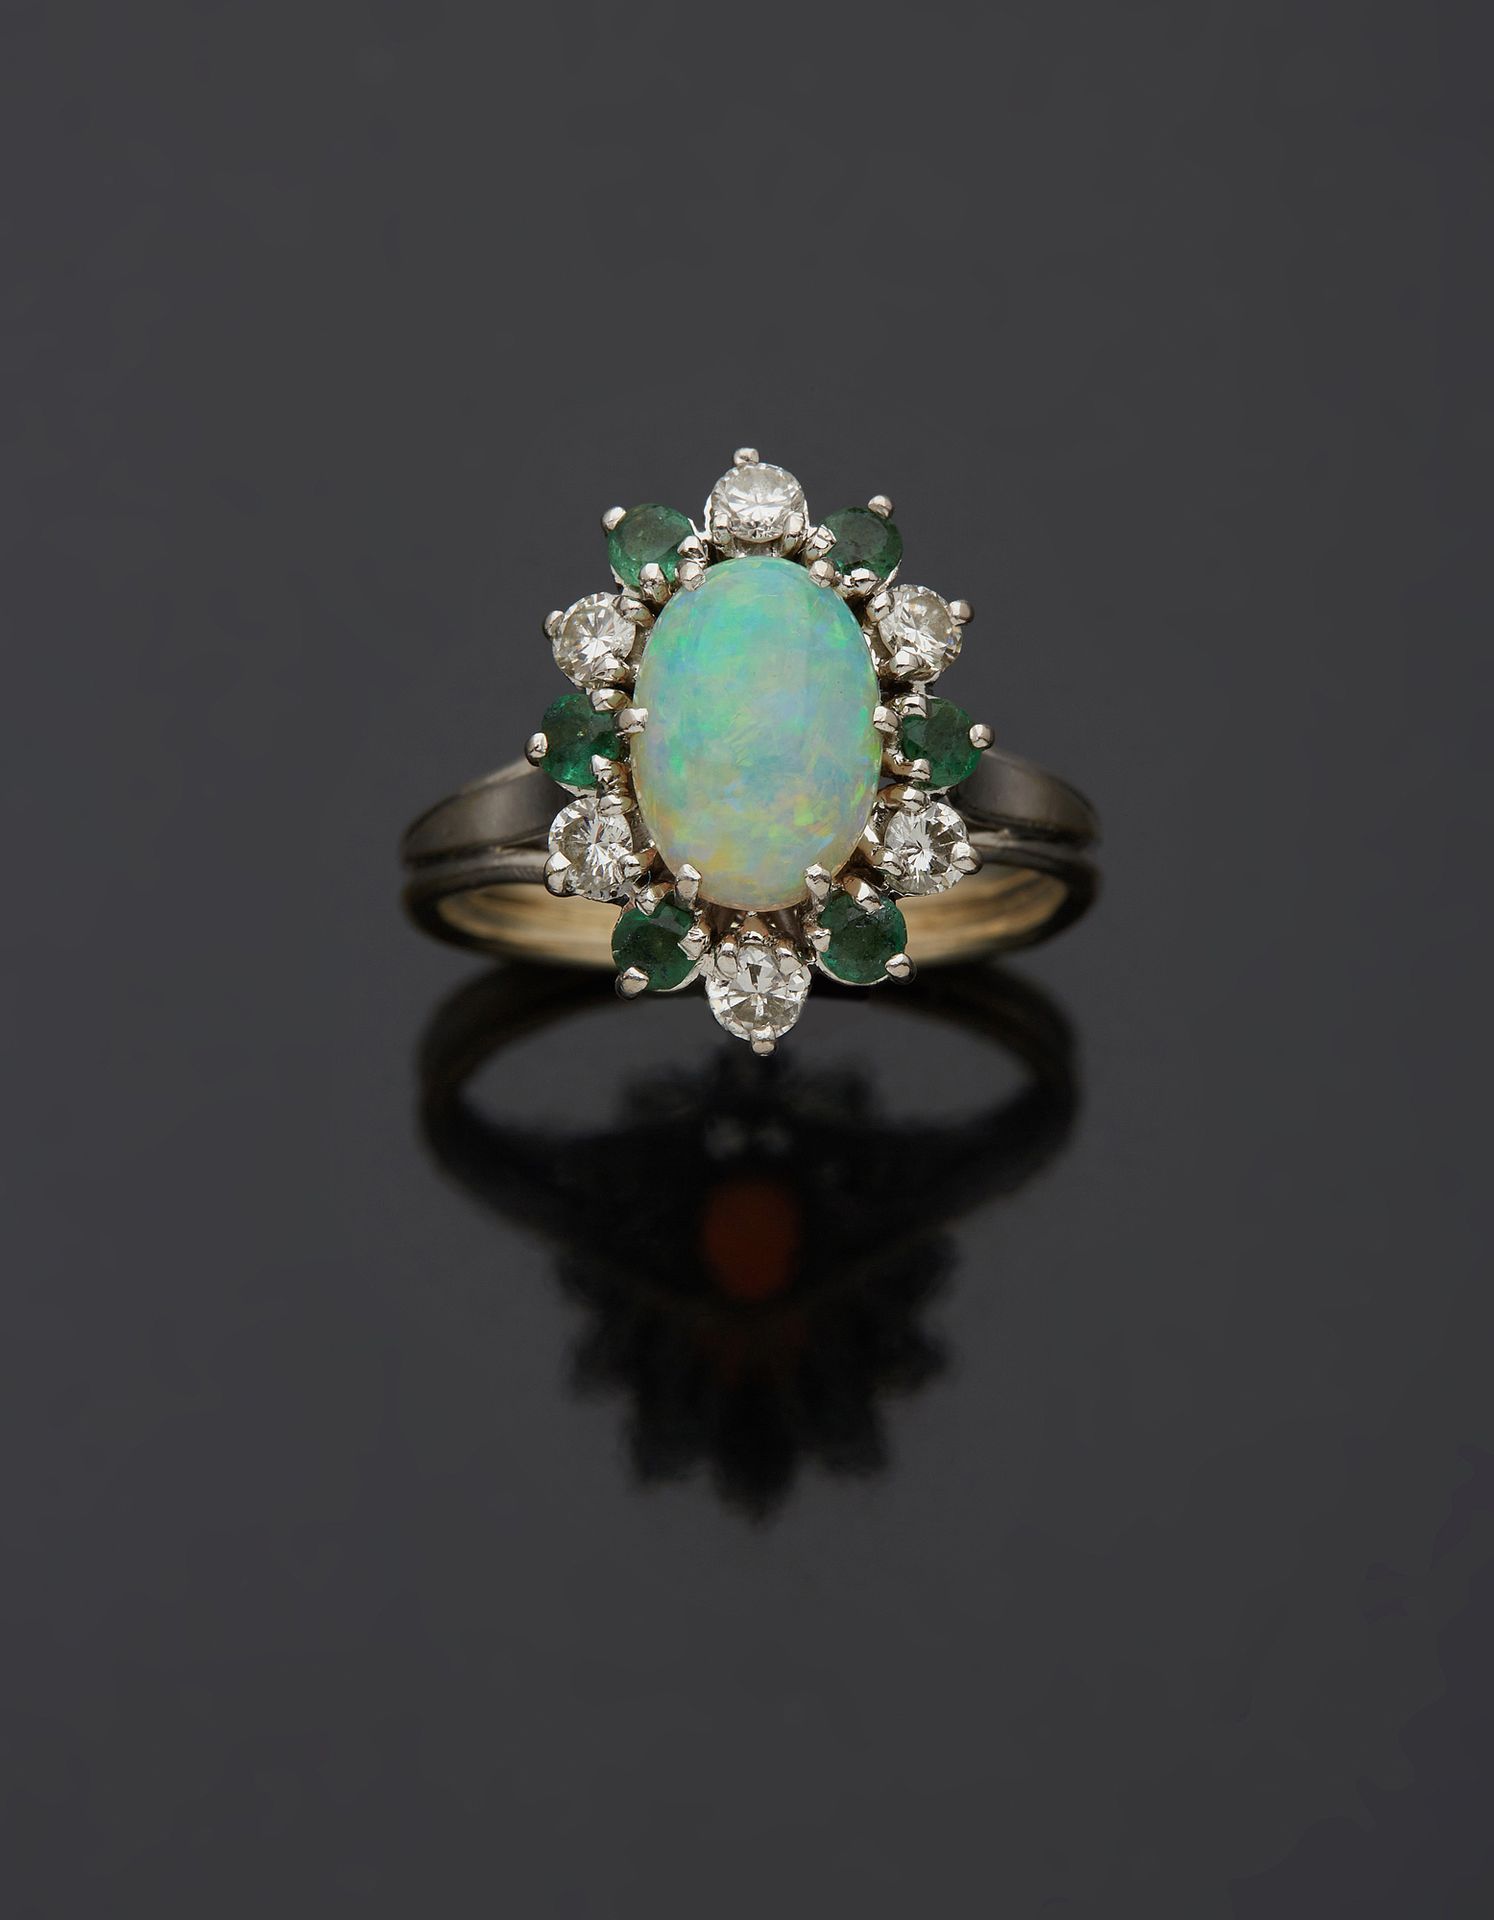 Null 一枚18K白金750‰的戒指，在祖母绿和明亮式切割钻石的交替环绕中镶嵌着一颗蛋白石。闪闪发光的石头。

手指尺寸53 毛重4.50克